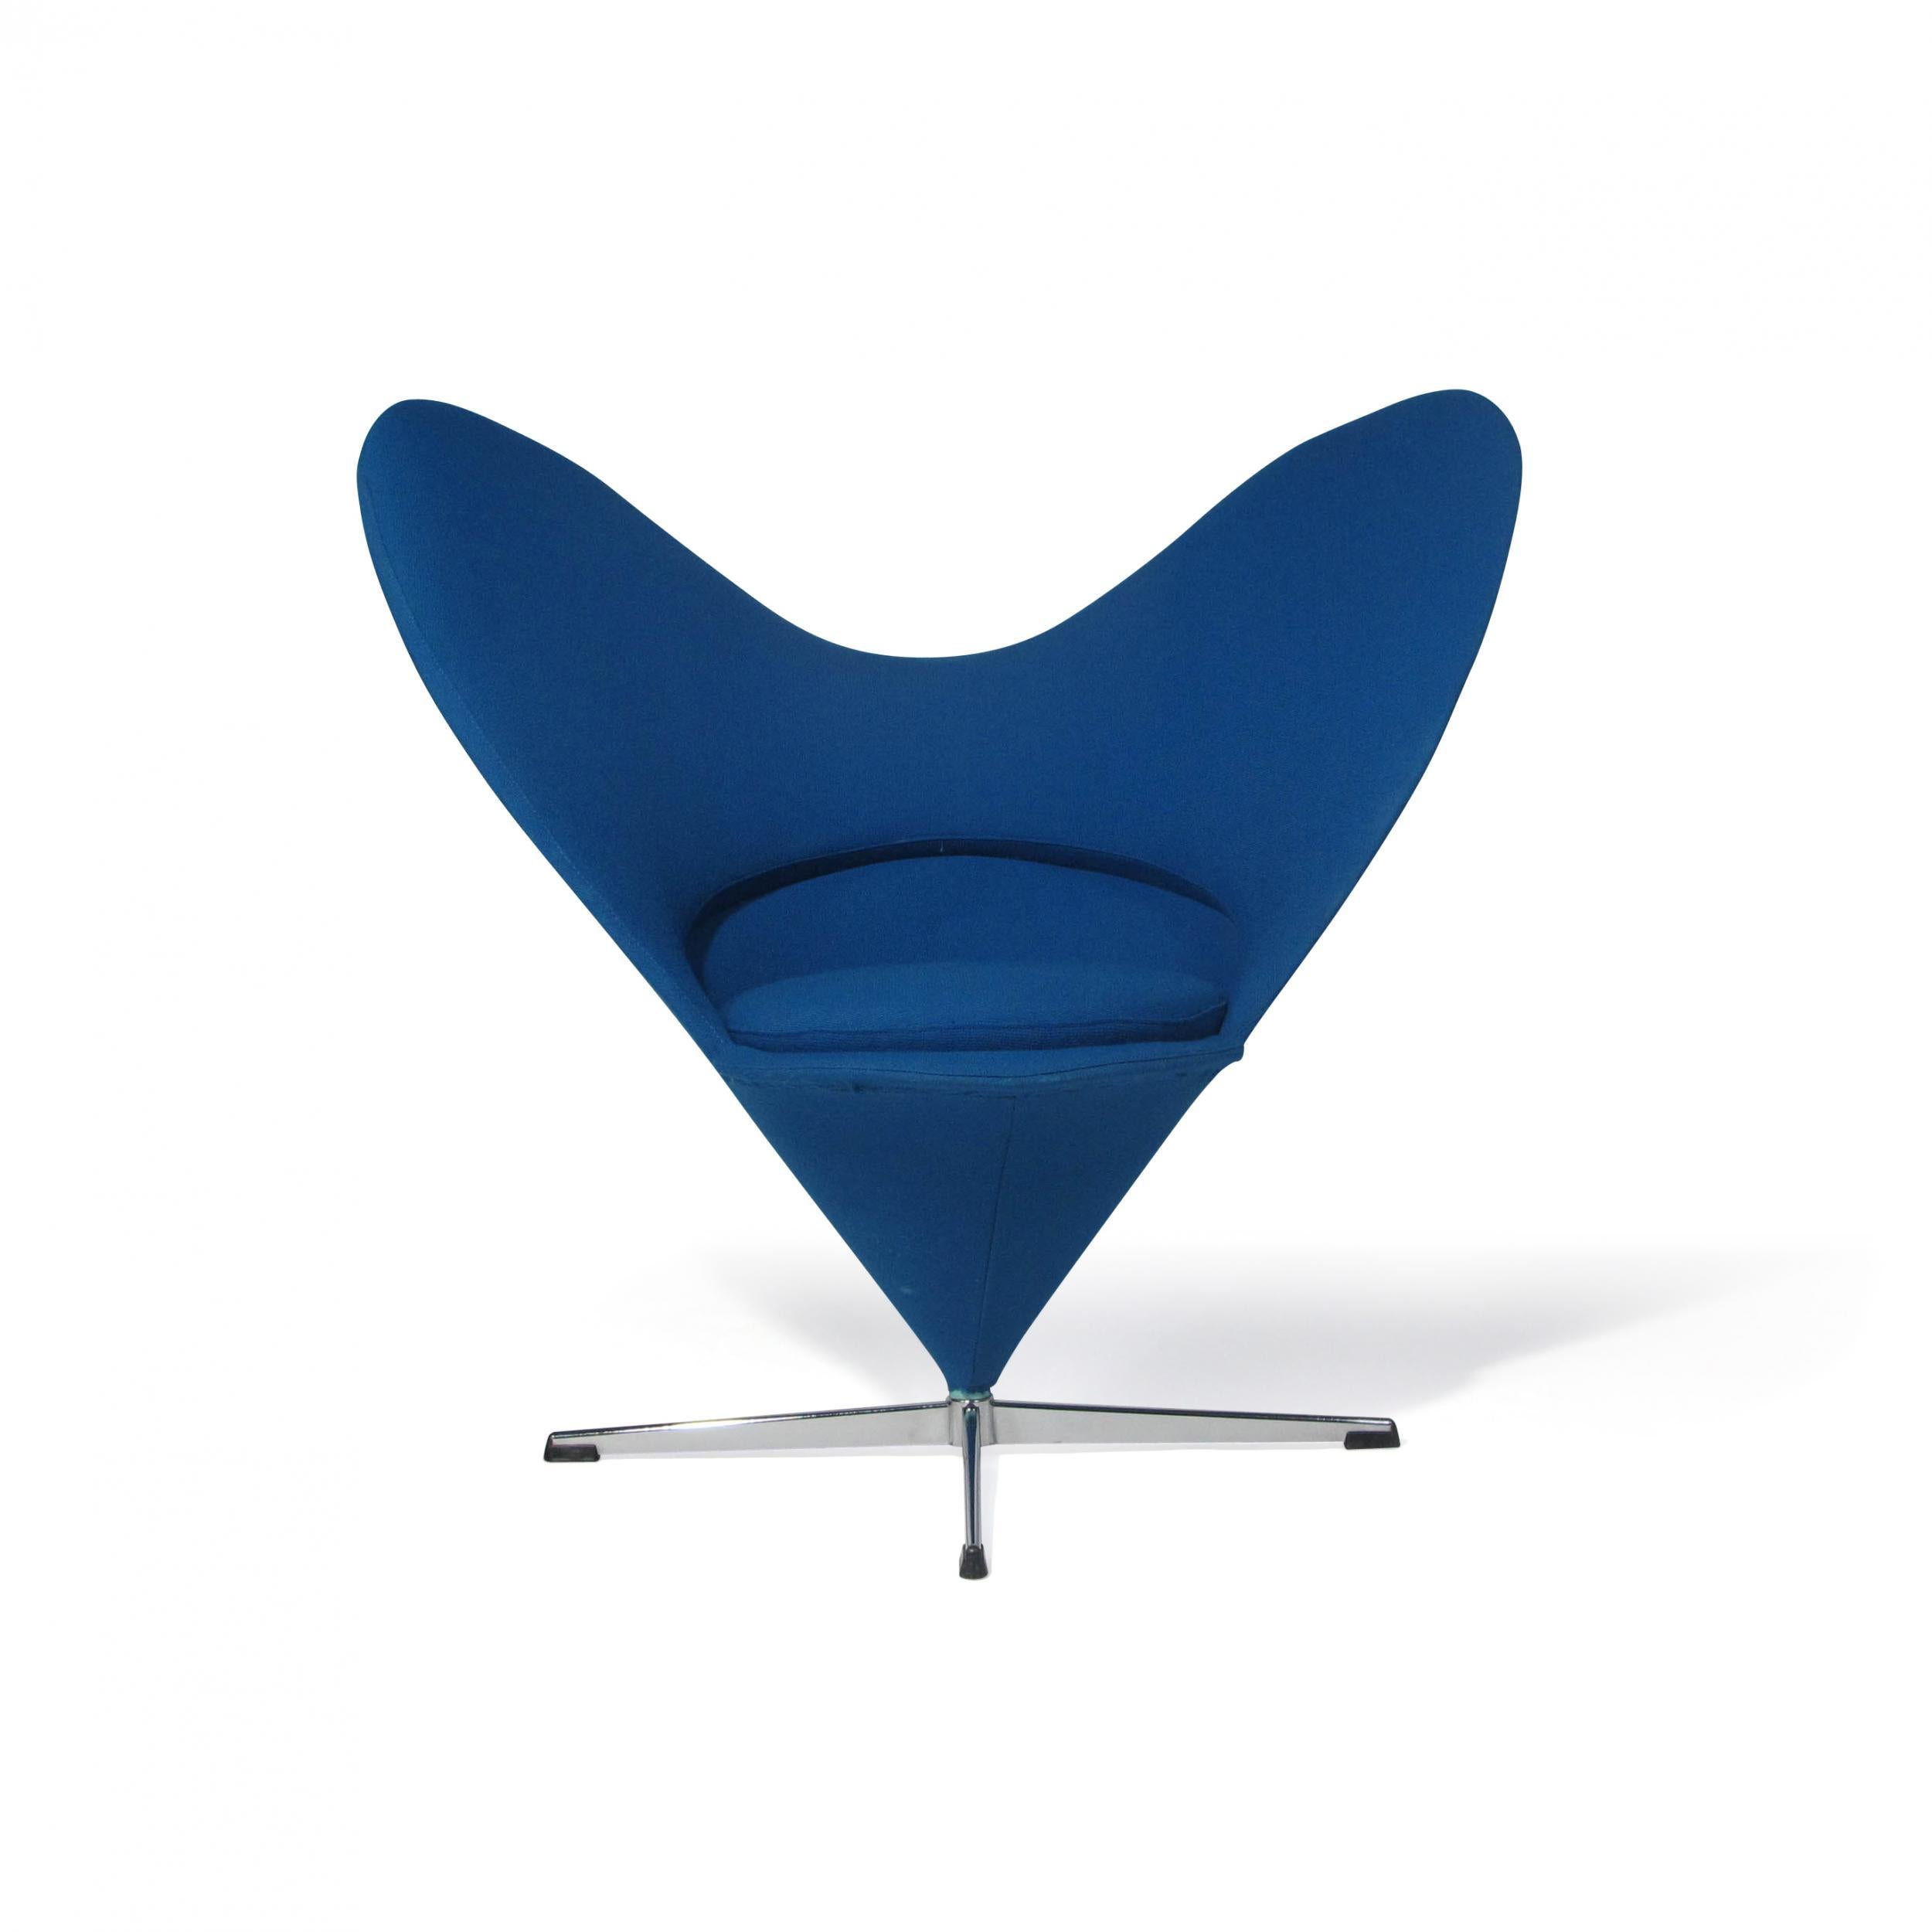 Danish chair designed by Verner Panton for Gebrüder Nehl, model Heart K3, circa 1959, Germany. The chair is upholstered in the original blue wool textile raised on a steel pedestal base.